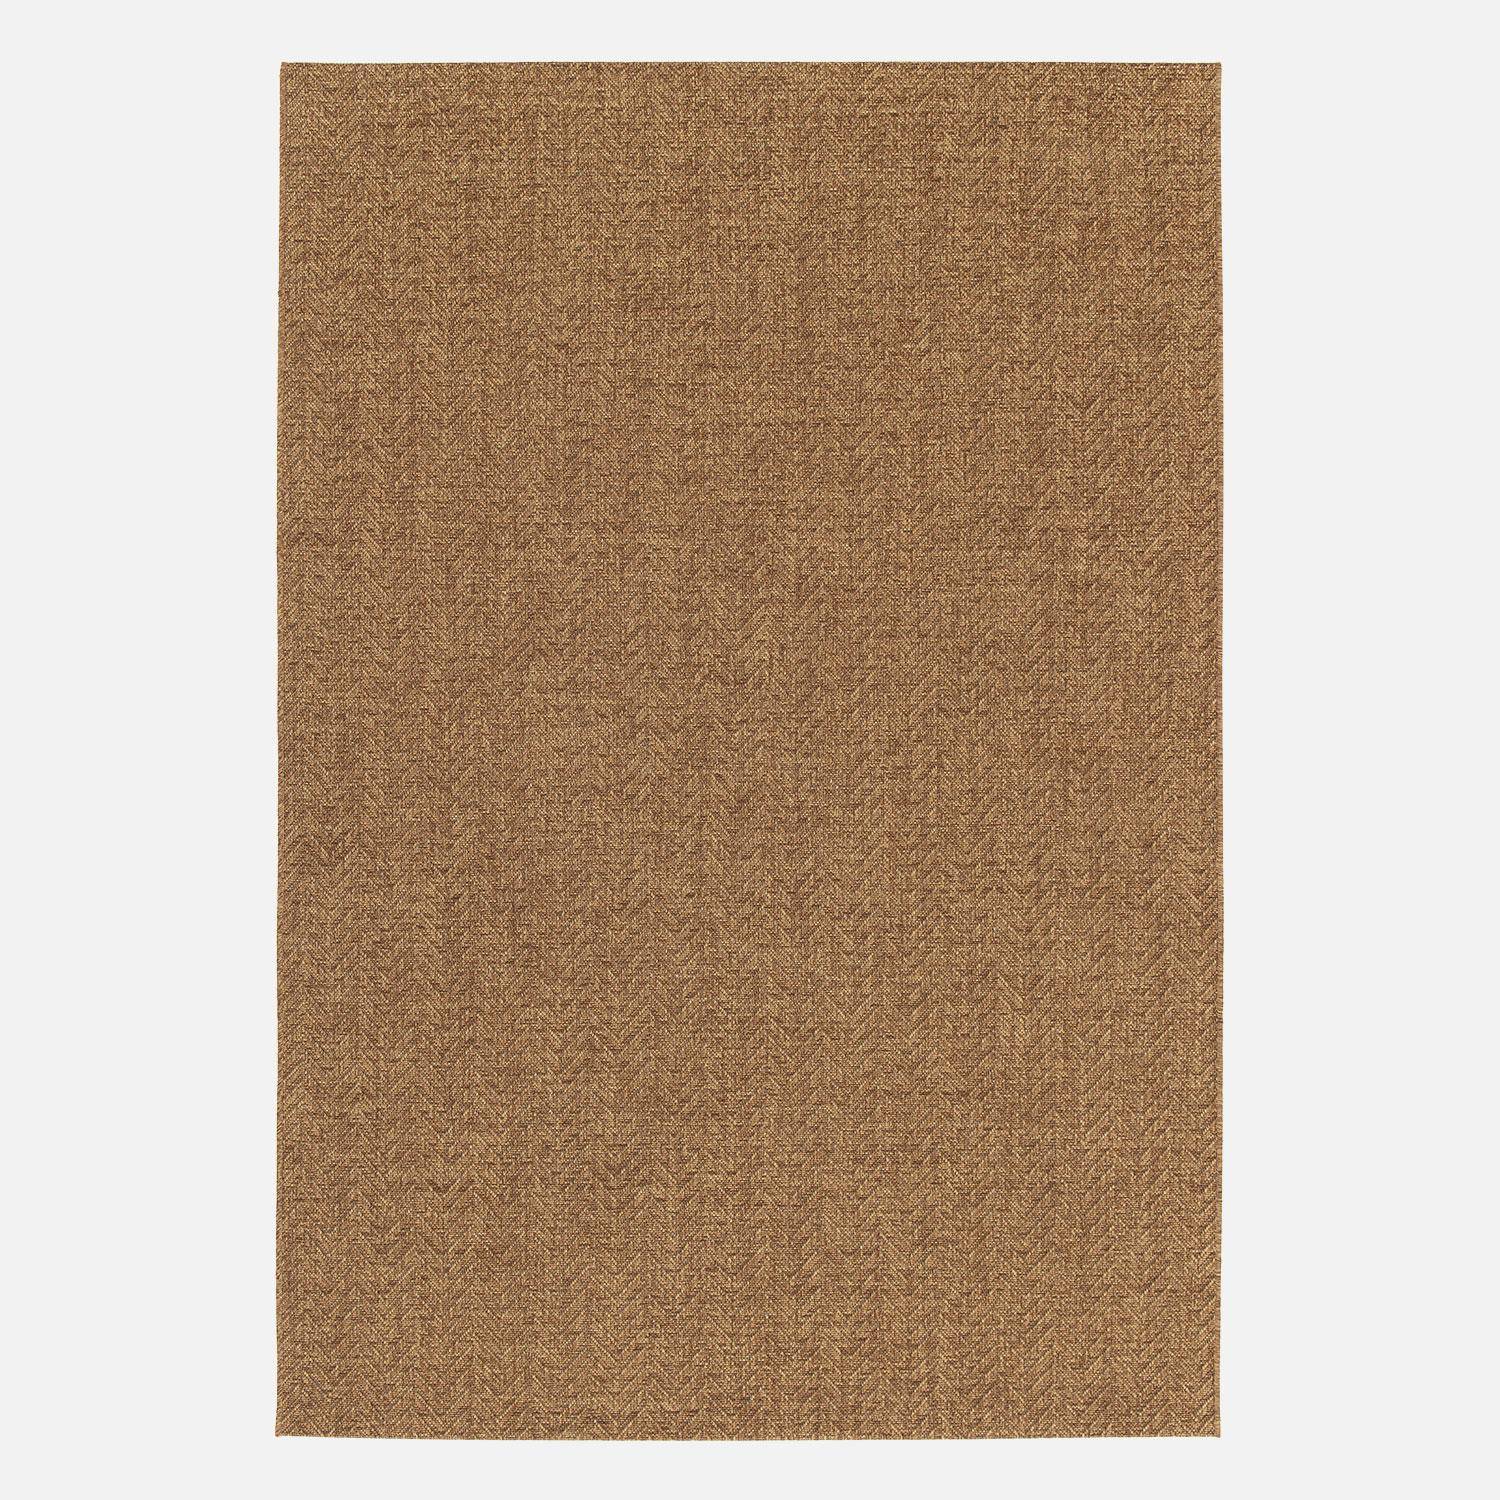 Jute-effect indoor/outdoor carpet in caramel, Oliver, 160 x 230 cm Photo3